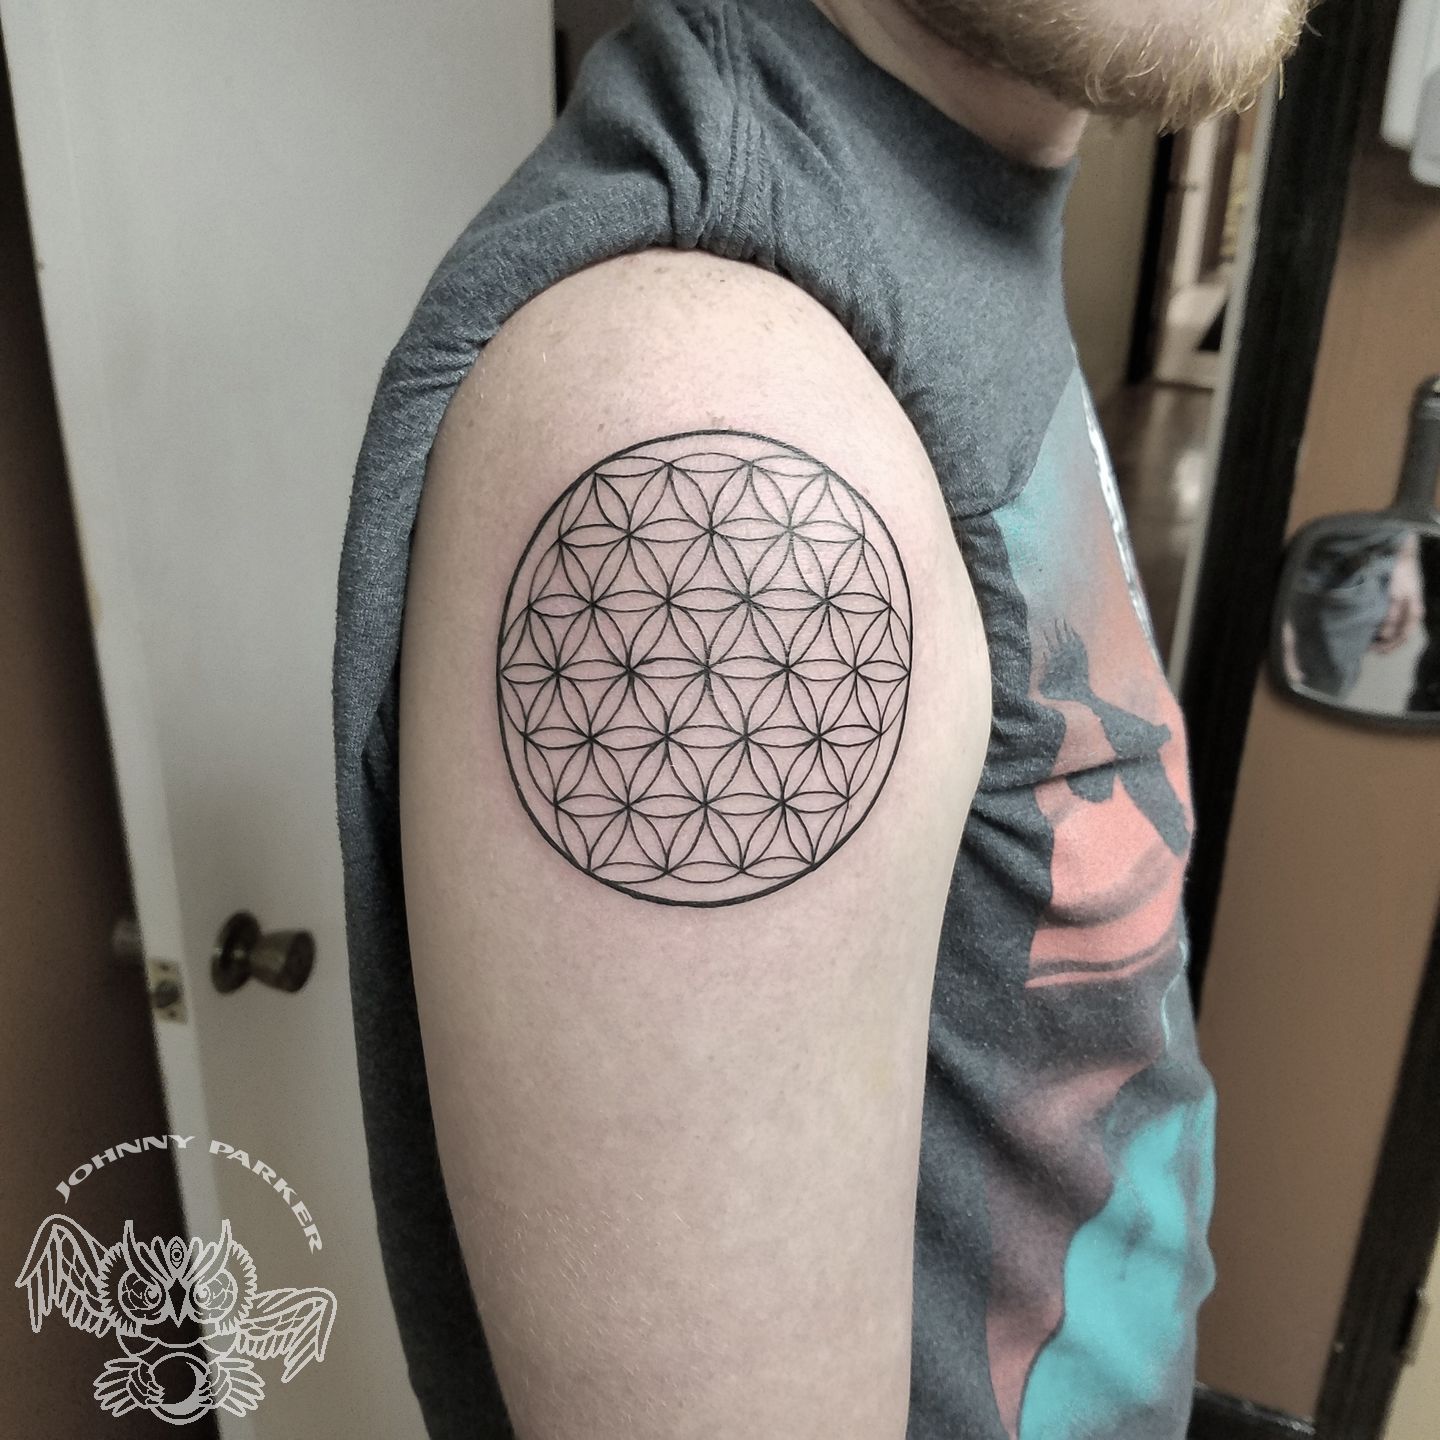 flower of life sacred geometry tattoo